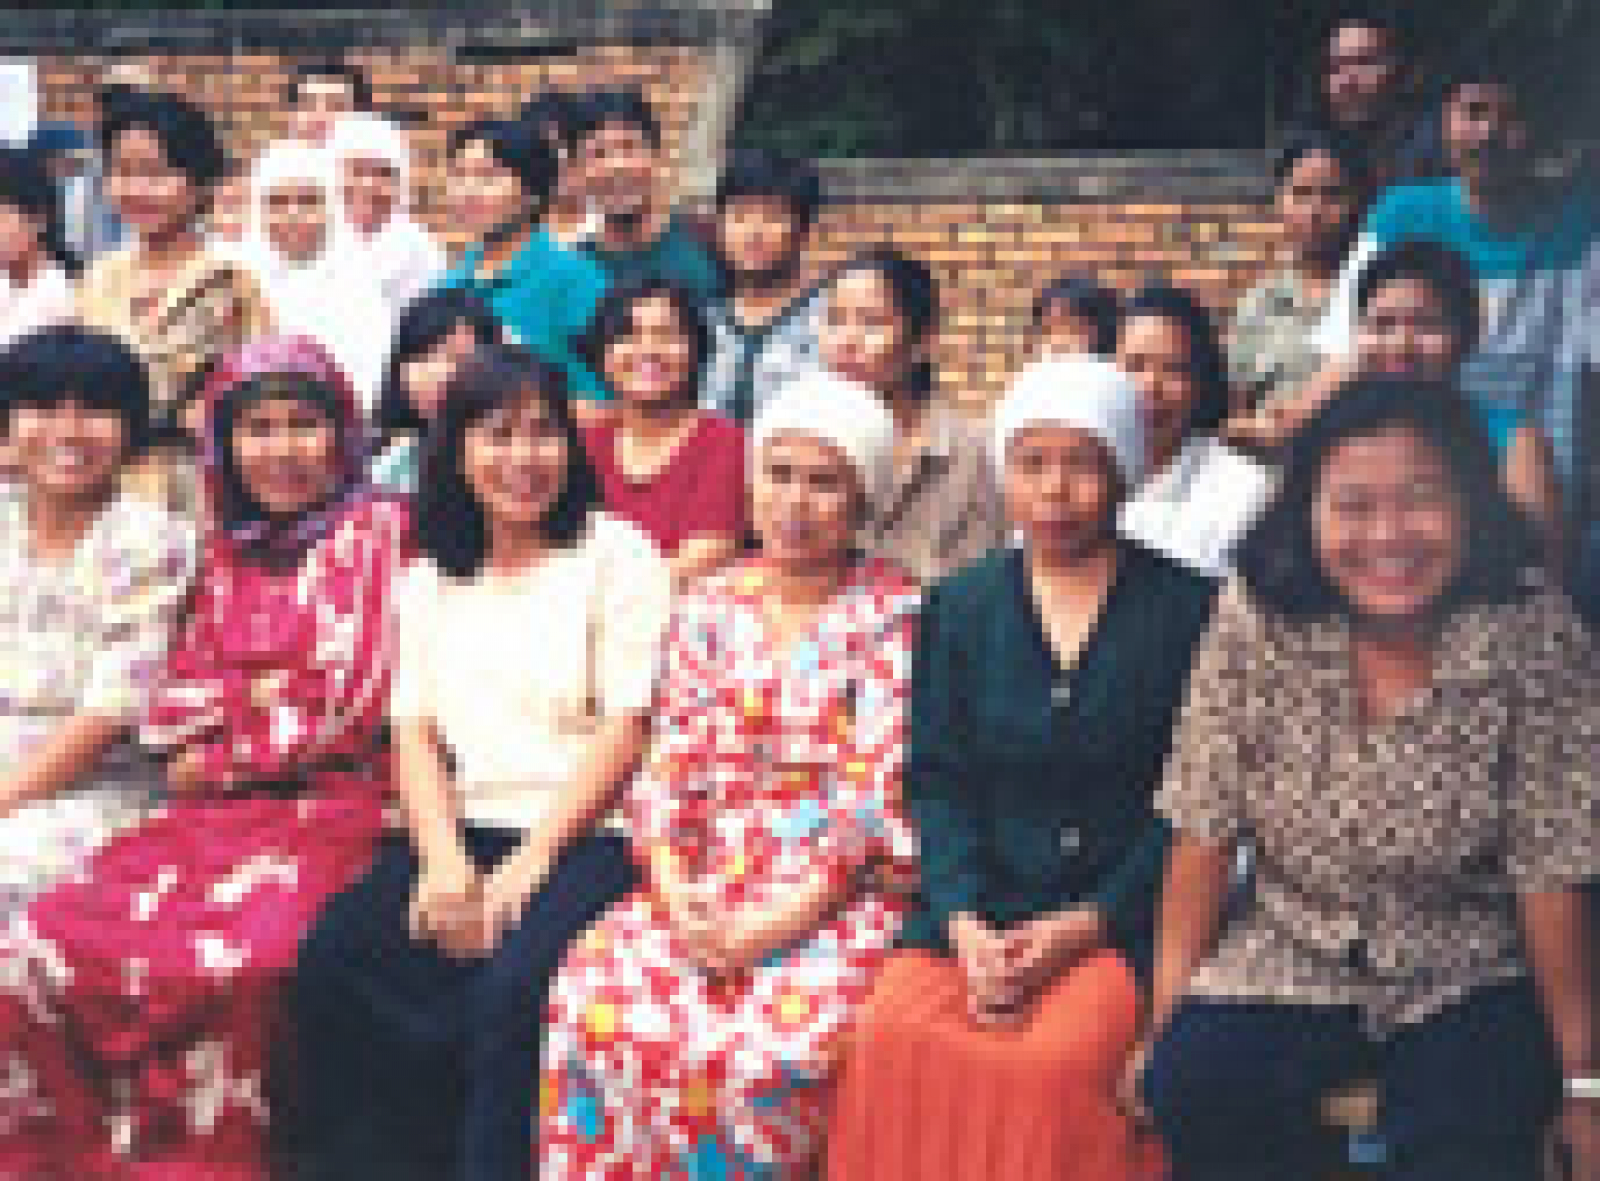 Indonesian Women Seeking Political Participation Win 2005 Madeleine K. Albright Grant